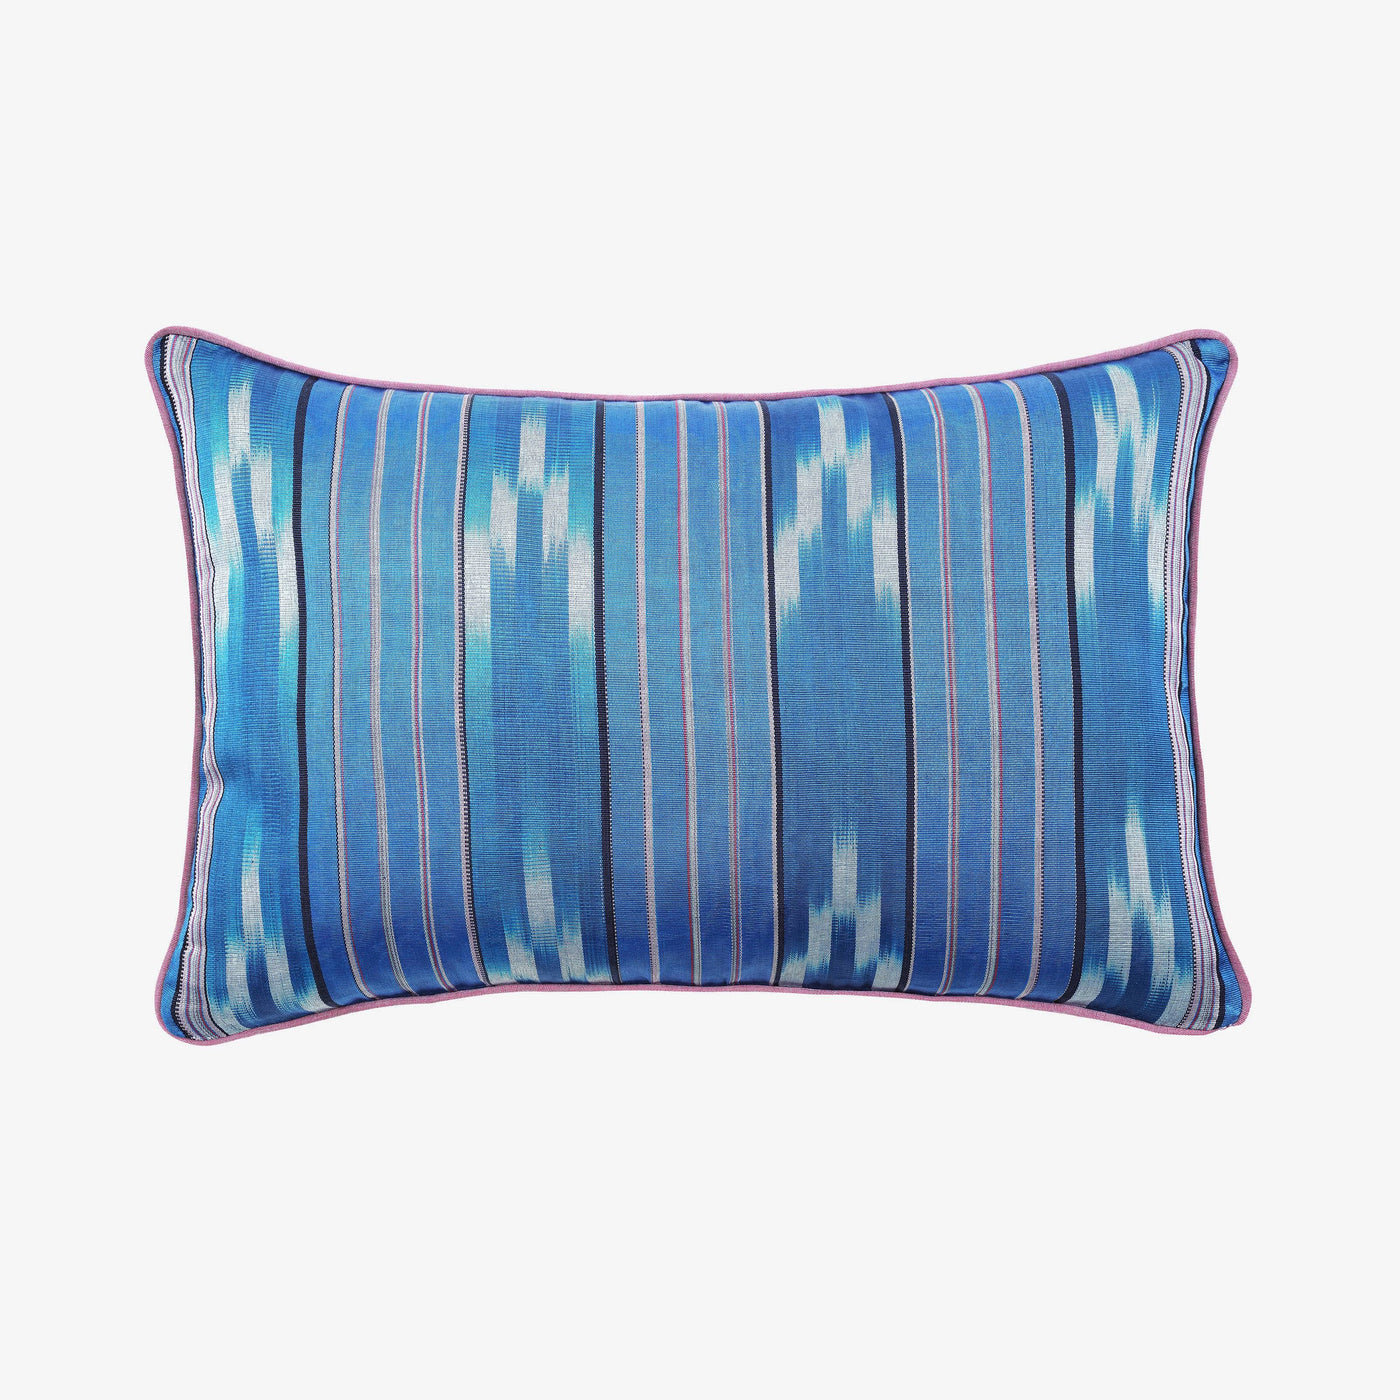 Kutnu Cushion Cover No. 2, Blue, 40x60 cm Cushion Covers sazy.com